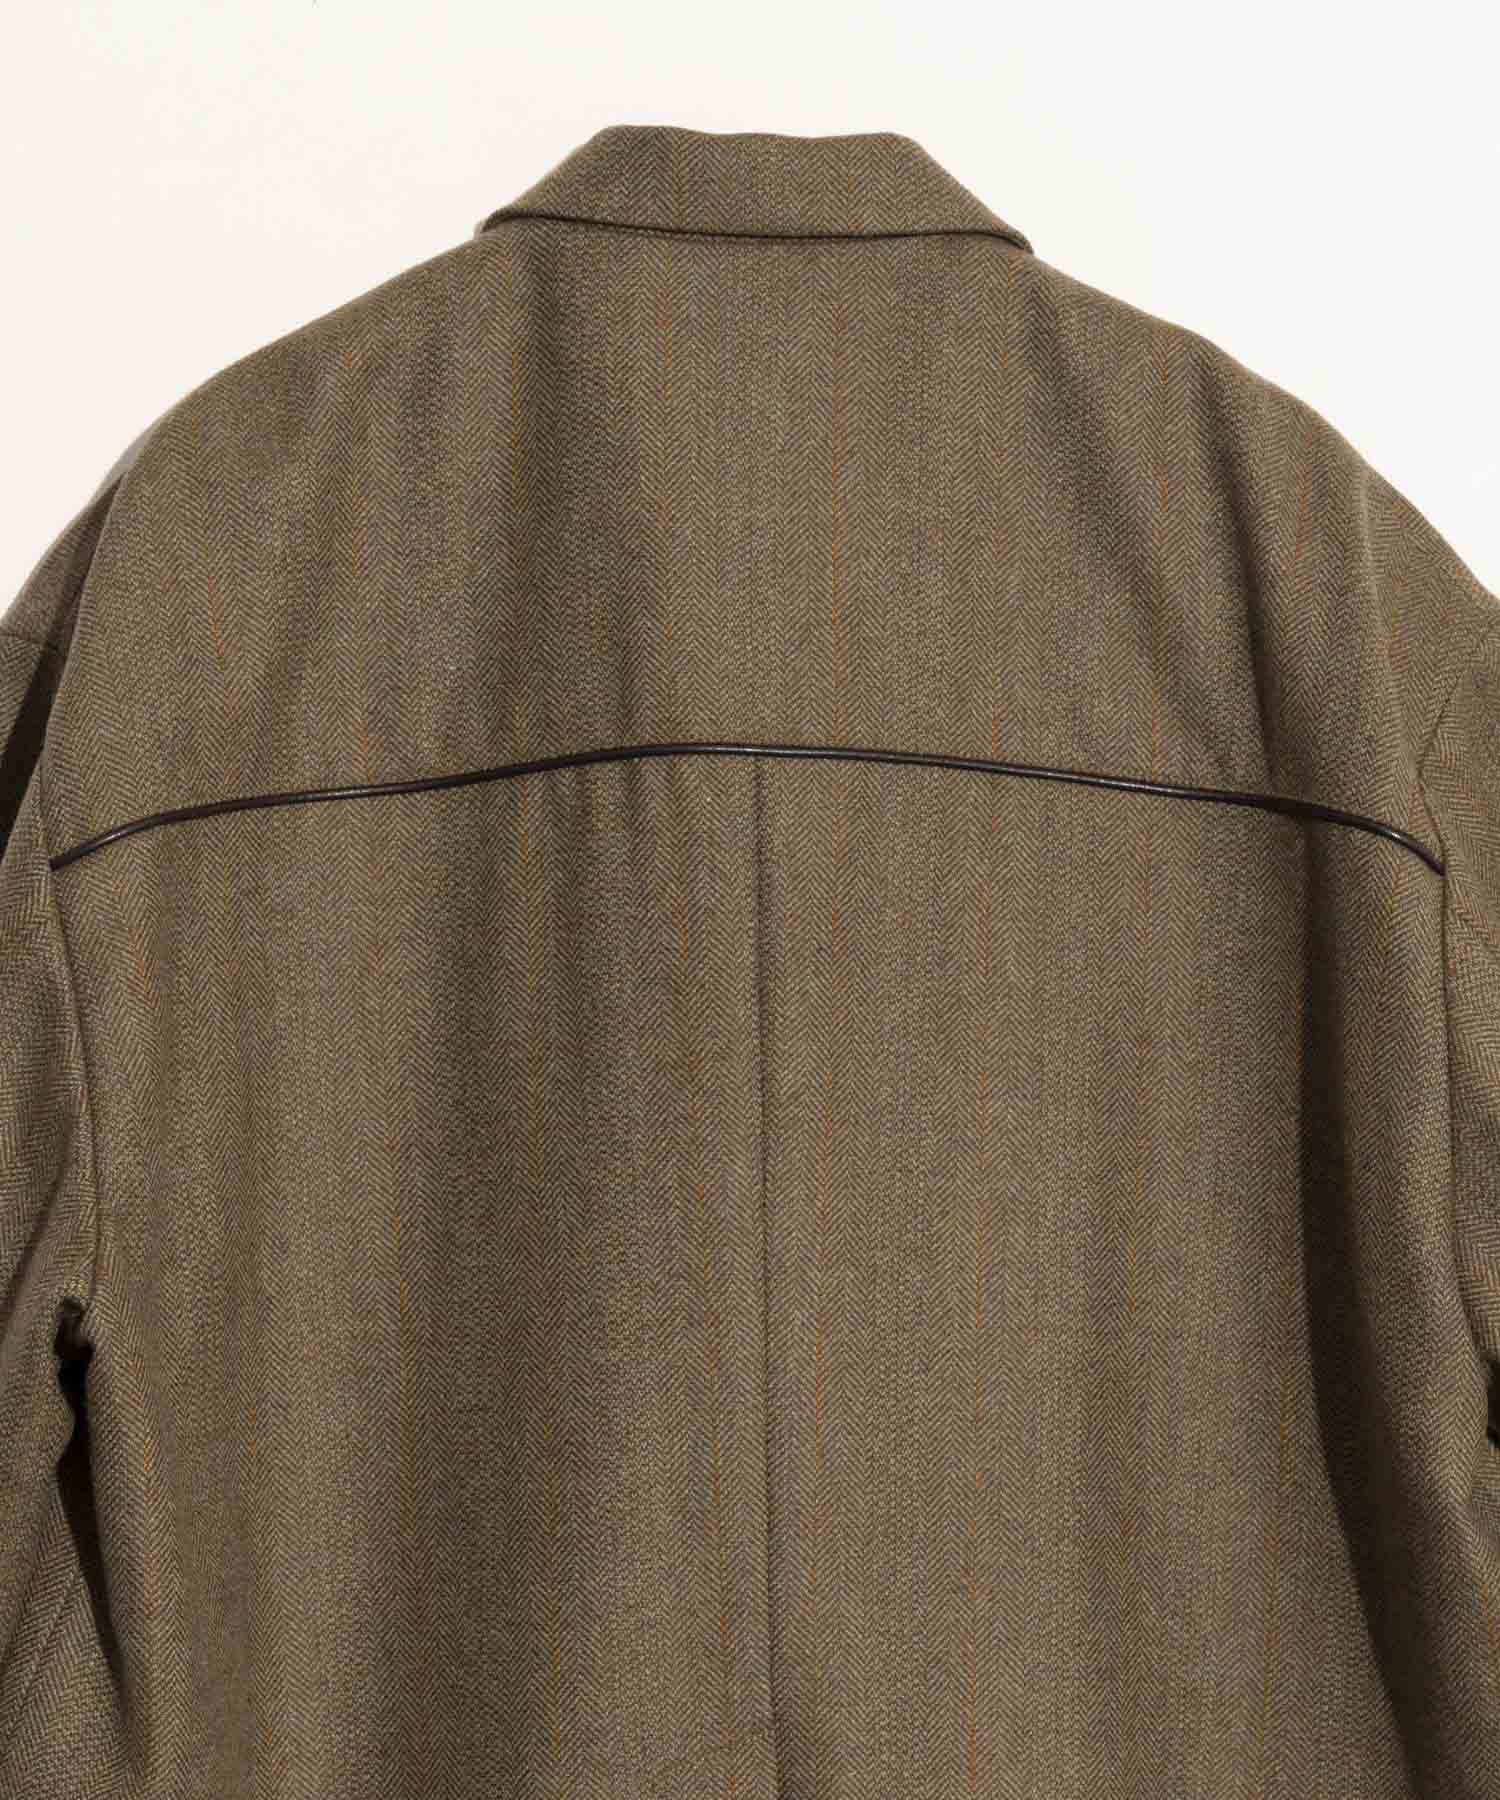 【SALE】【Italian Dead Stock Fabric】Prime-Over Canadian Jacket